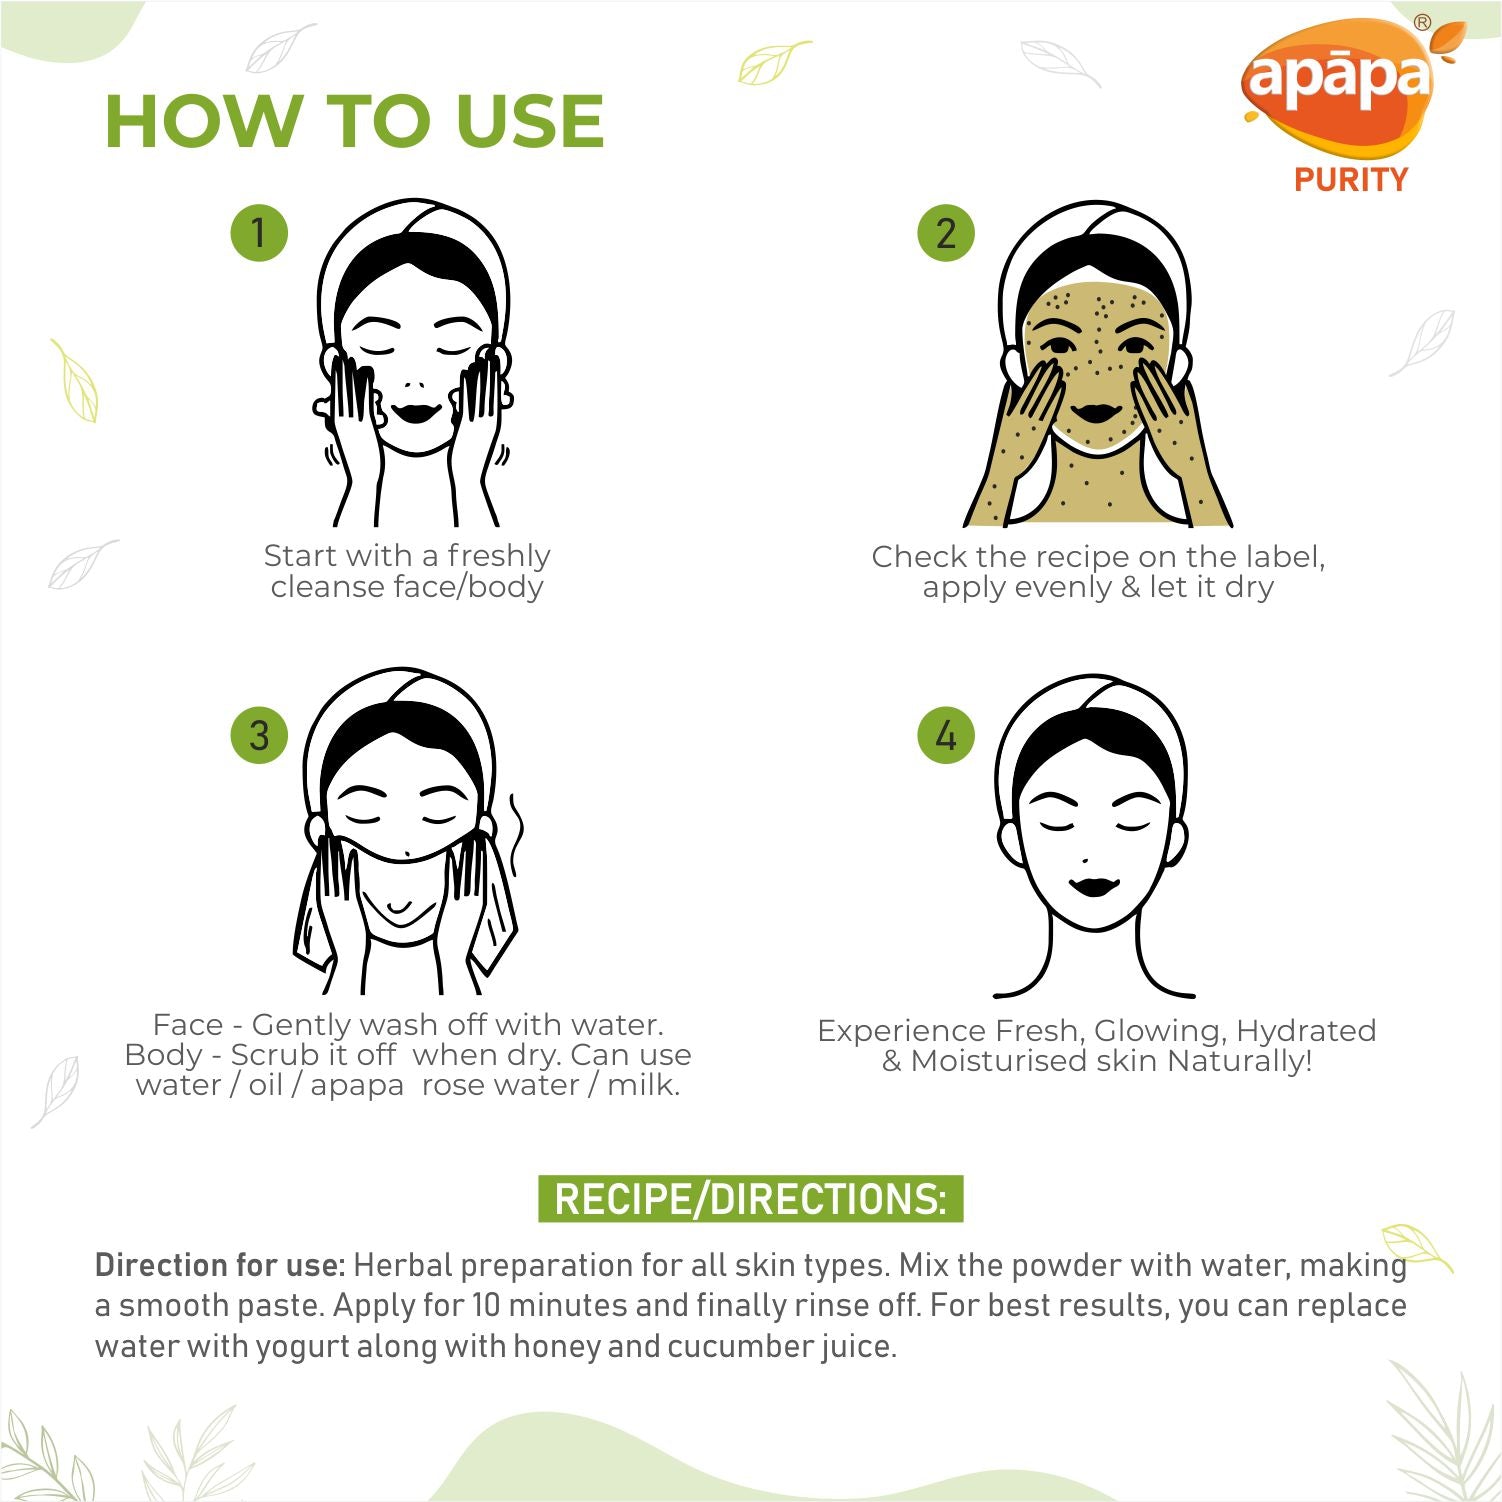 APĀPA Skin Firming Green Peas Powder for Face & Body